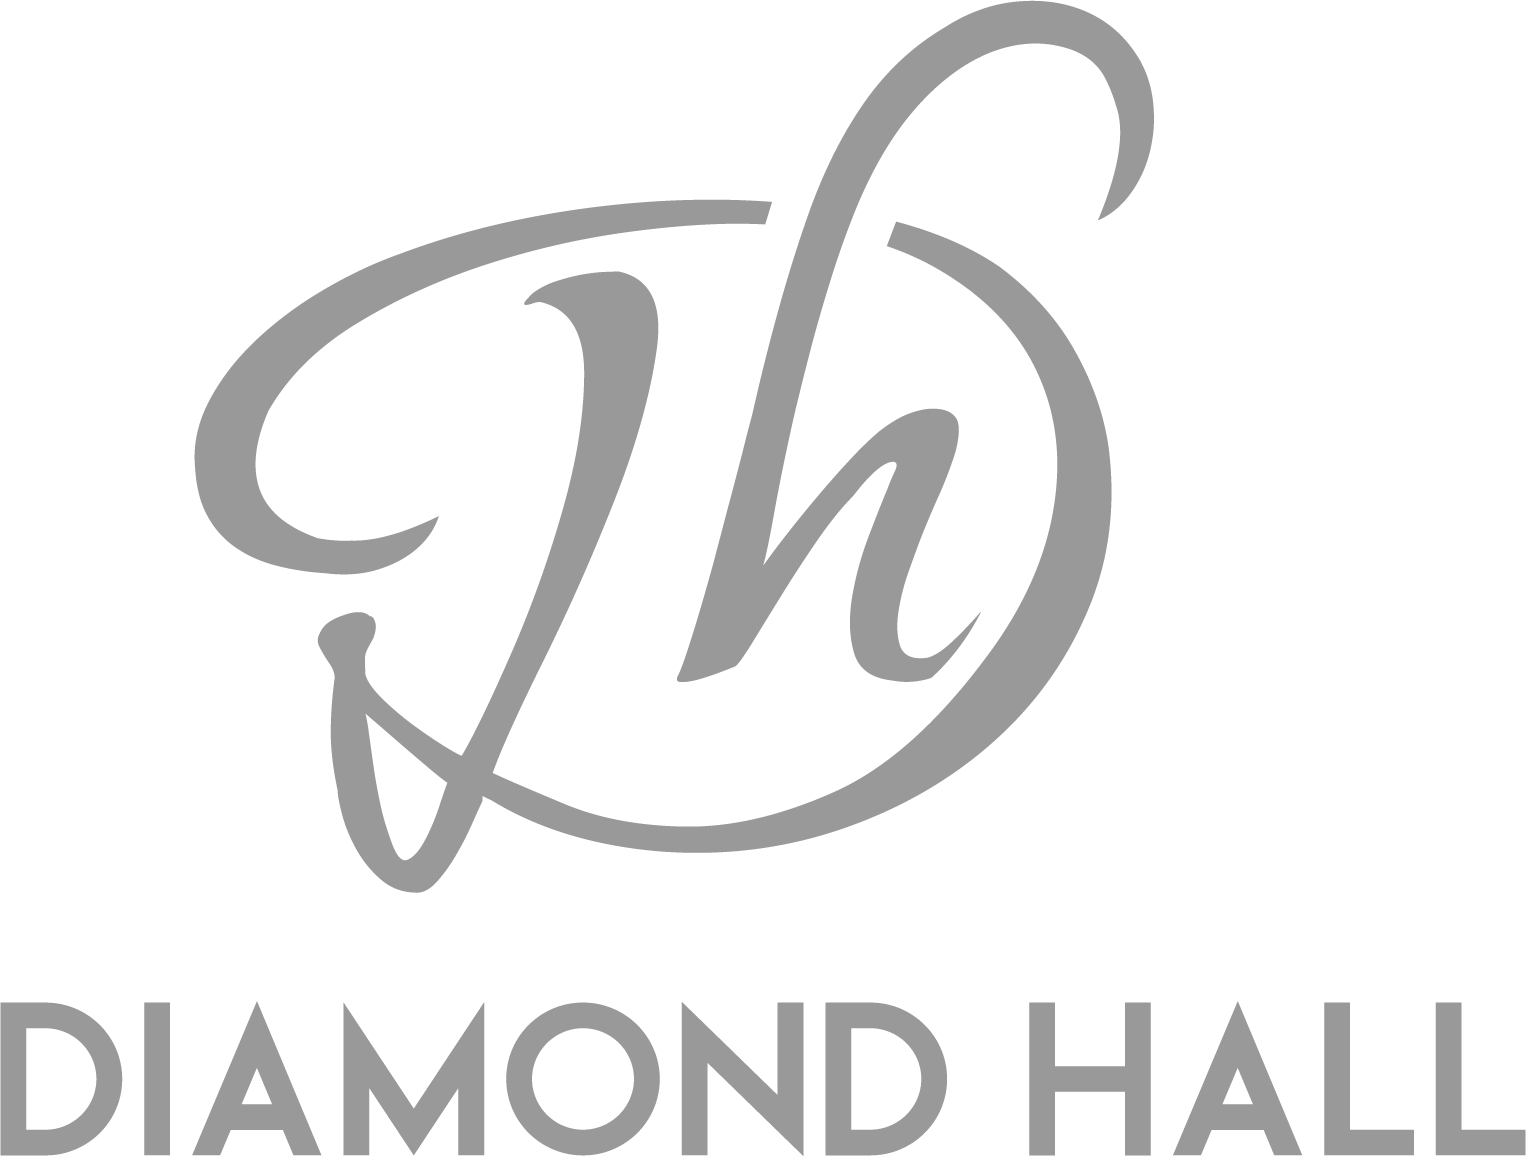 Diamond Hall